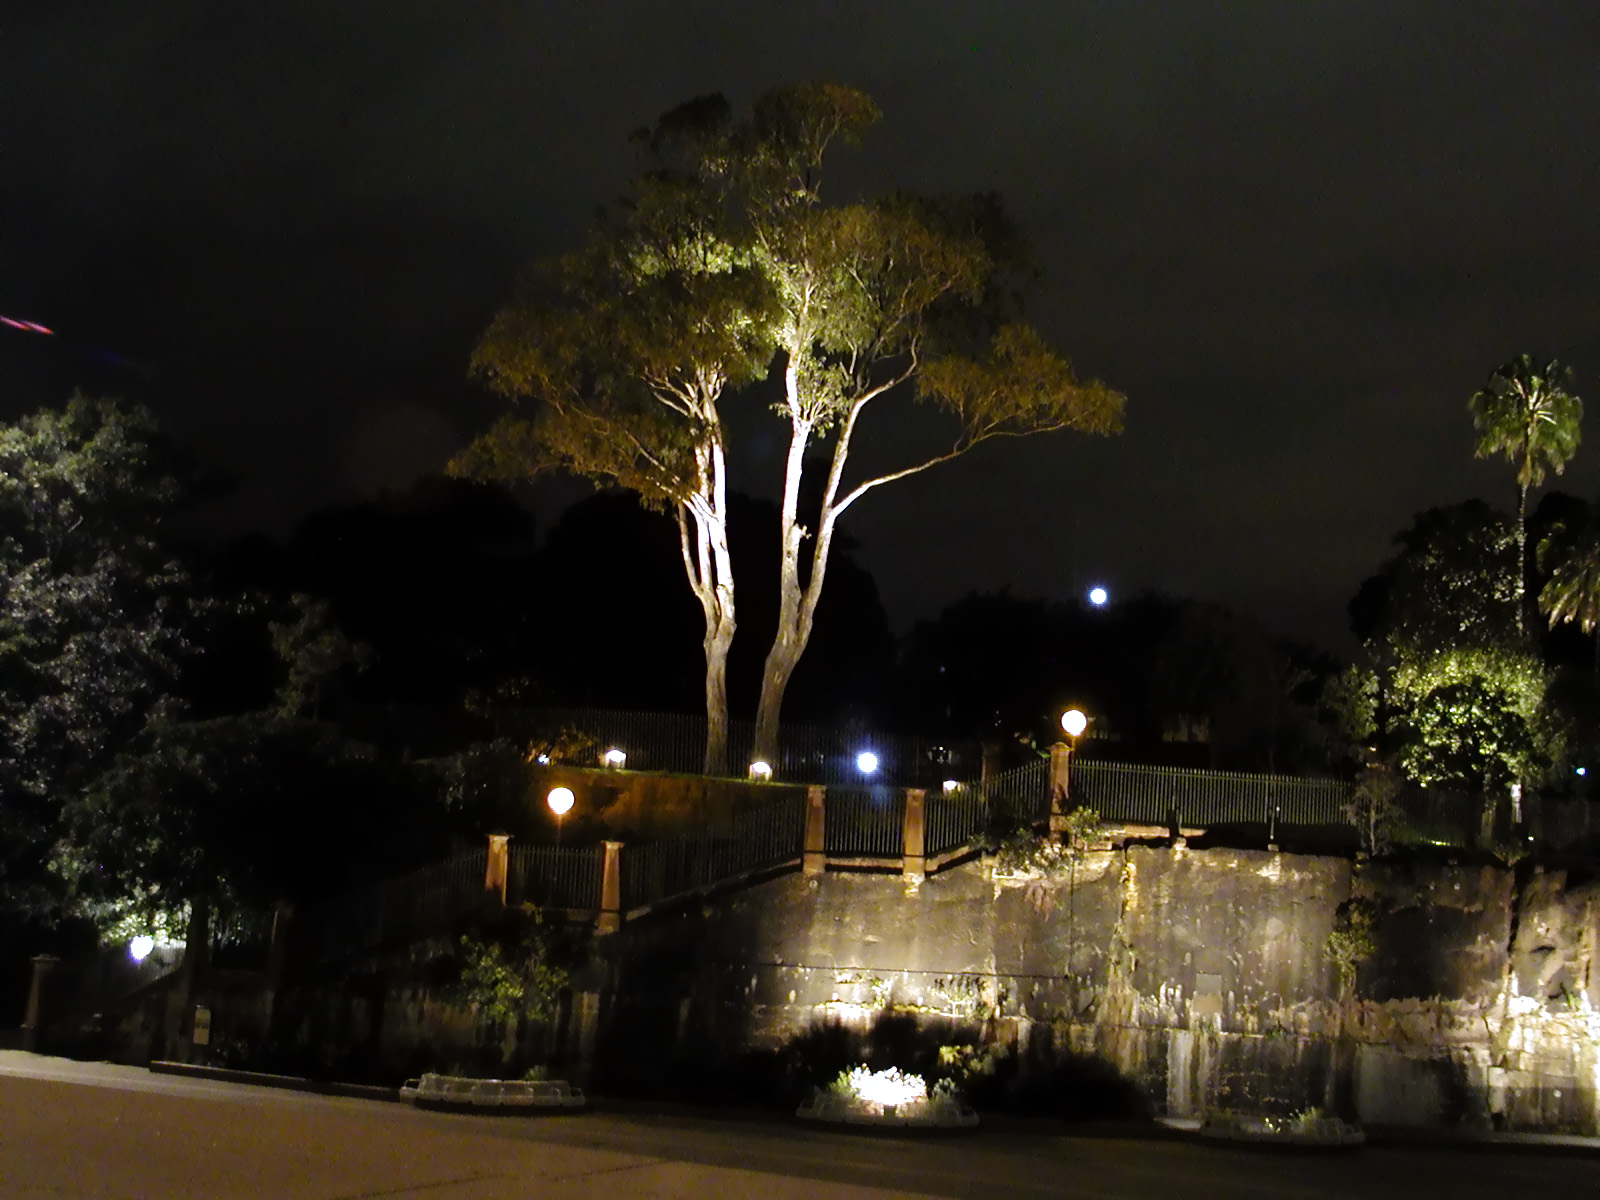 16-Jun-2001 21:19 - Sydney - Trees near the Opera House